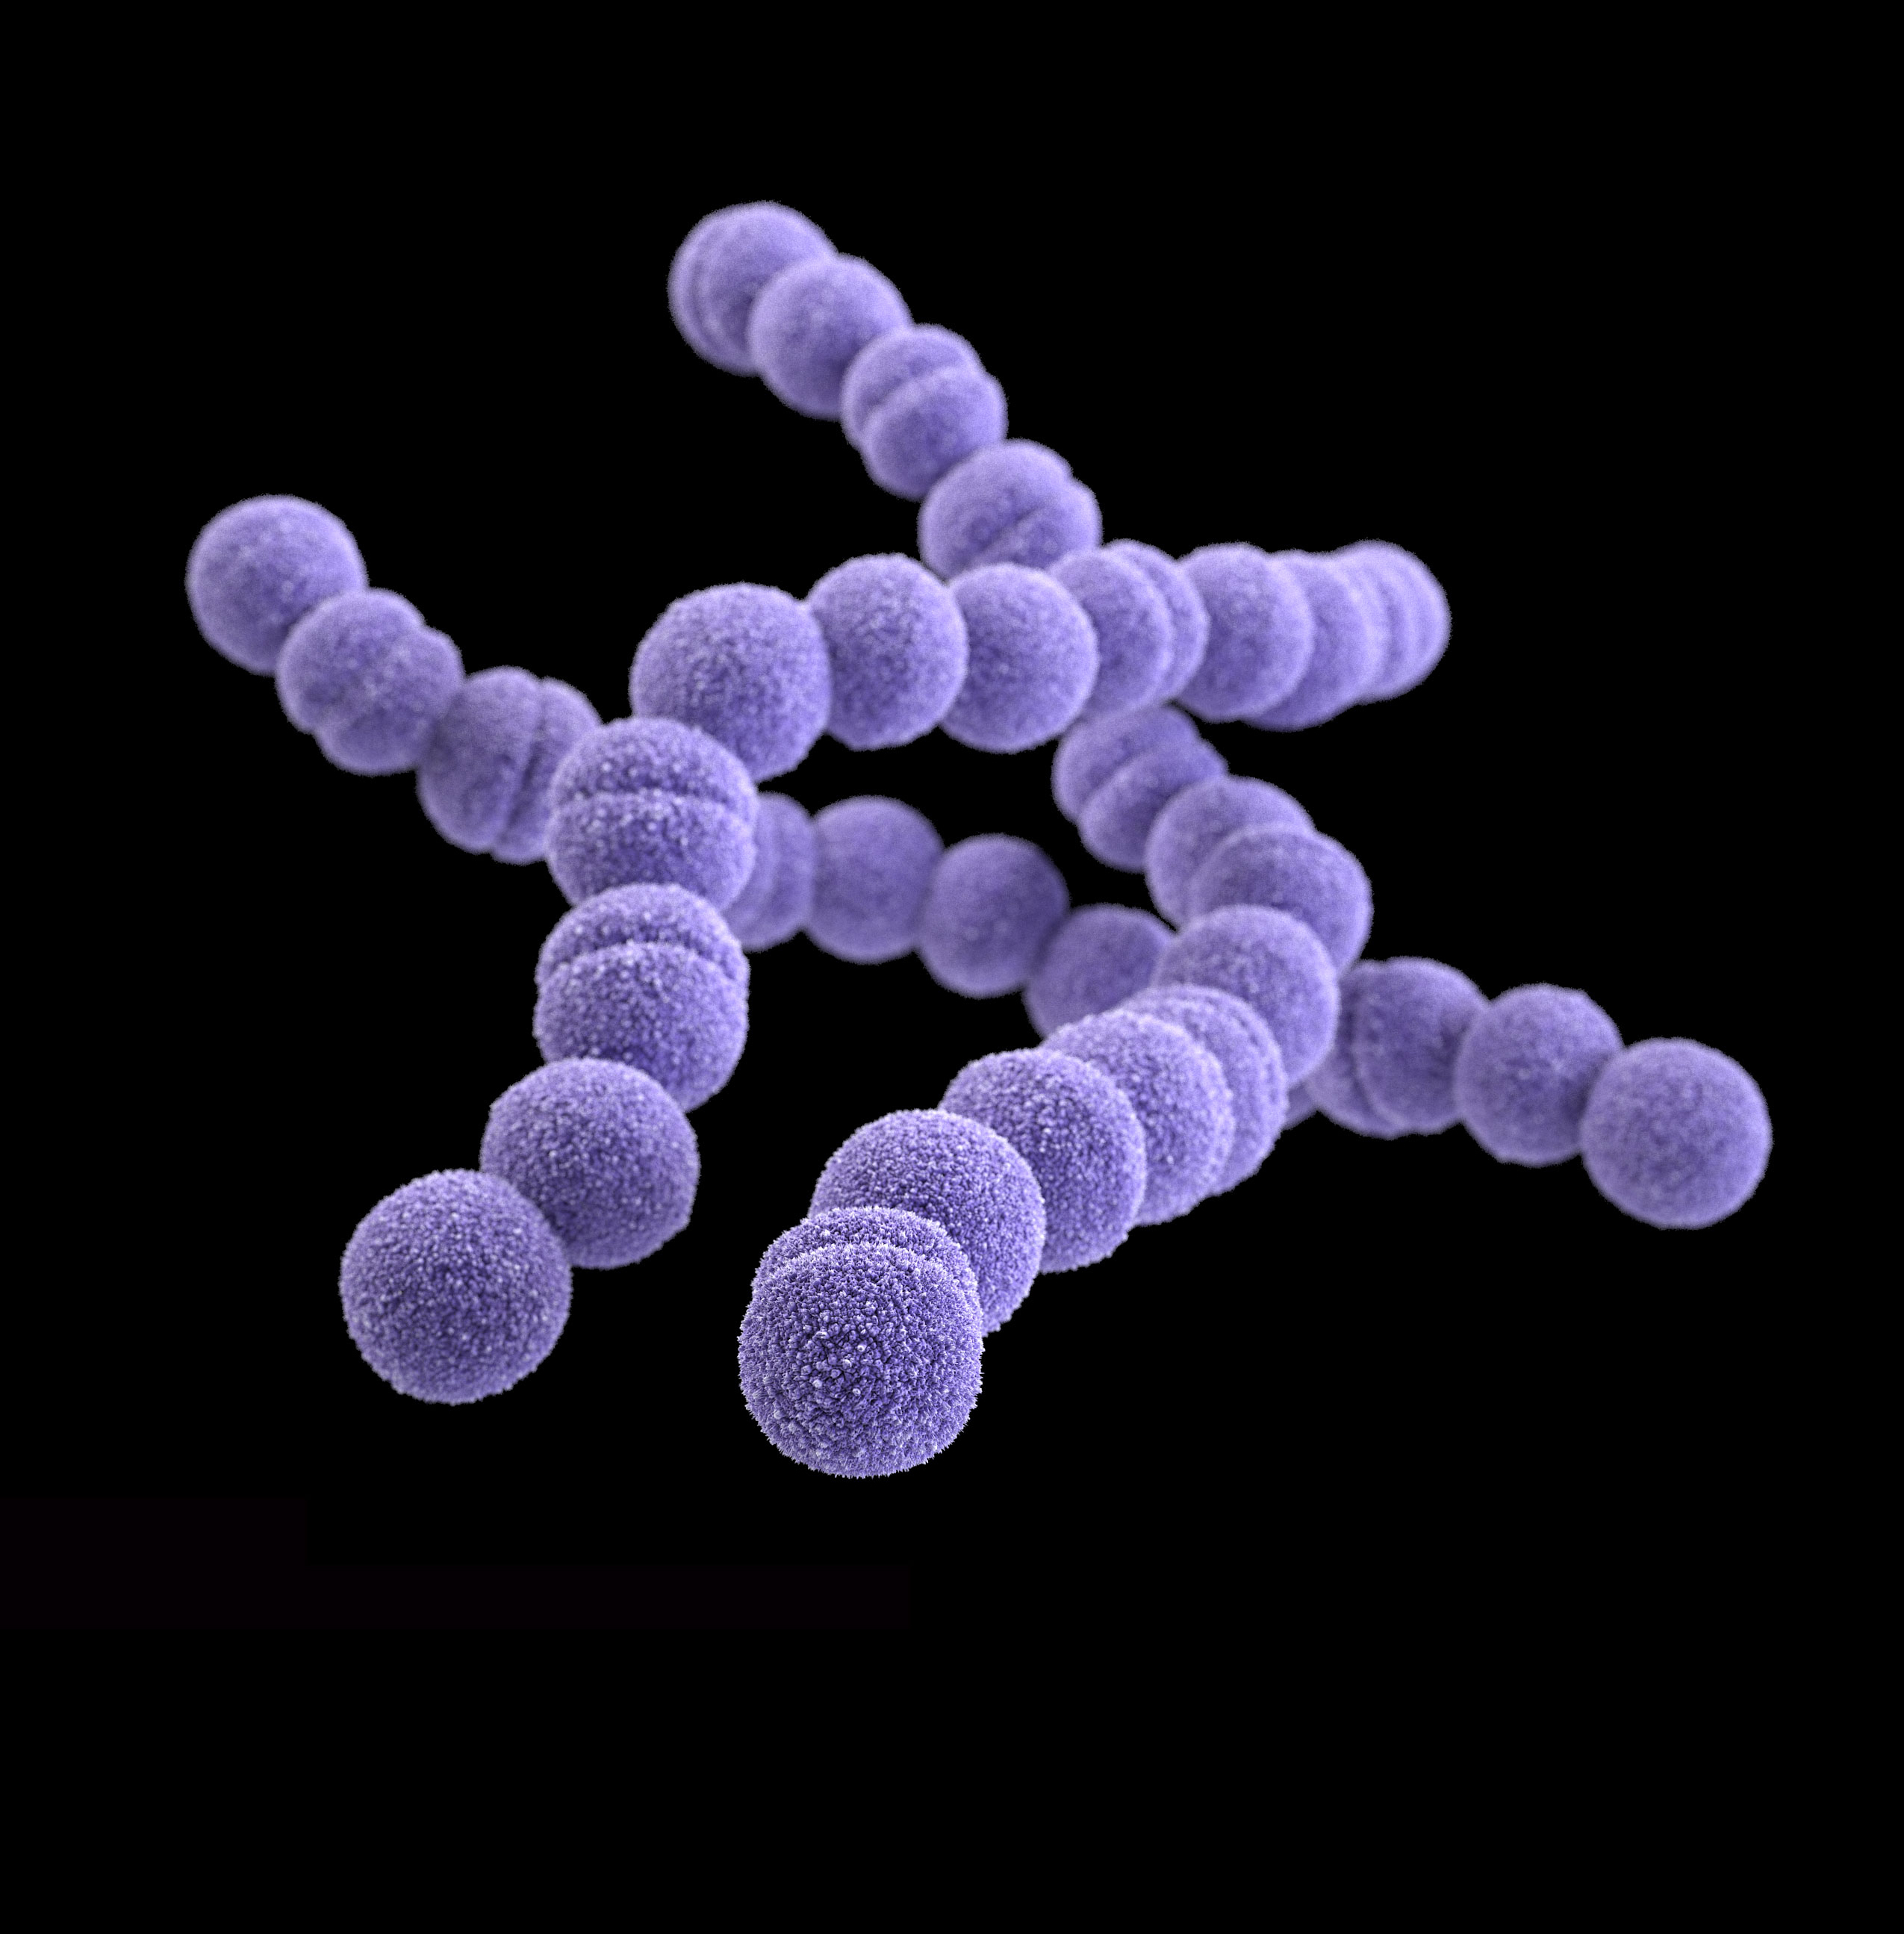 FleshEating Bacteria’s Genomic/Transcriptomic Trigger Found